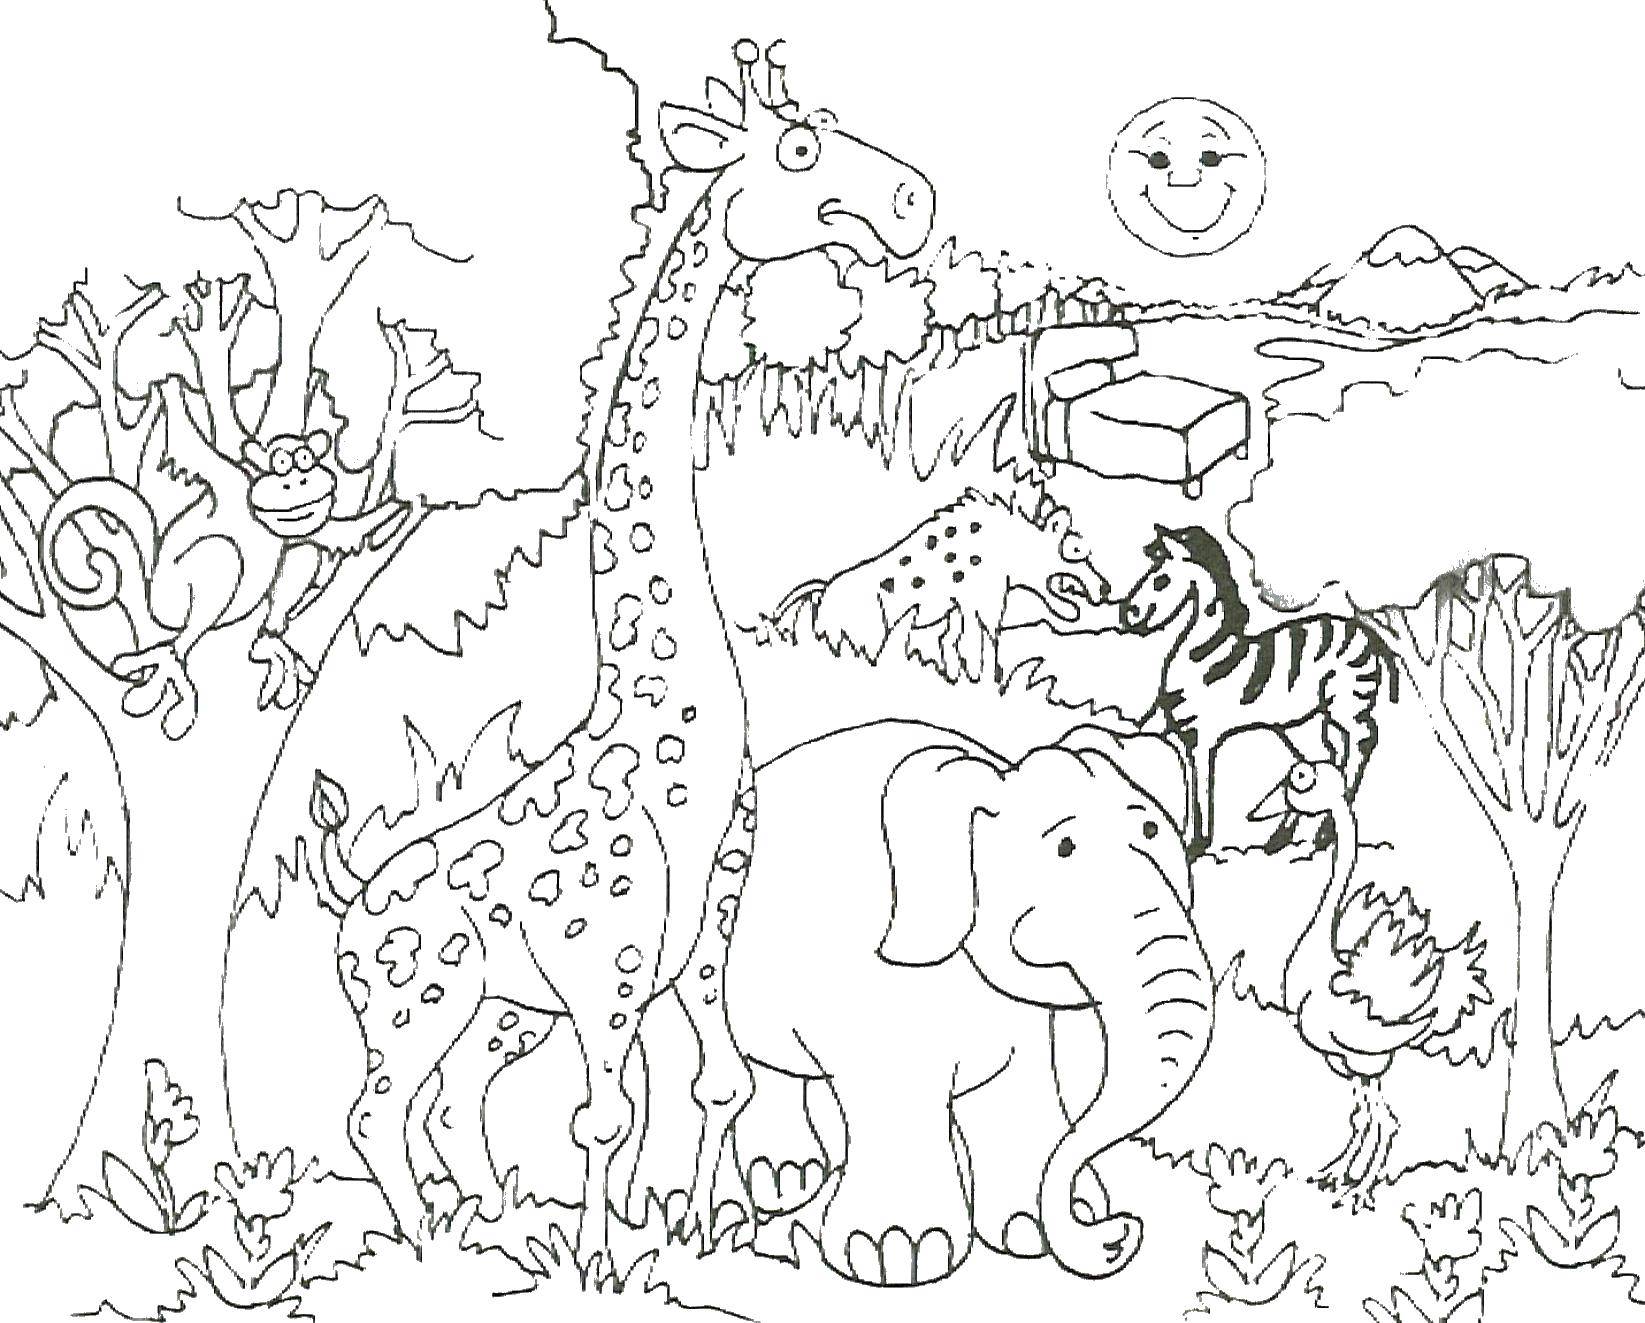 Coloring Elephant, giraffe, ostrich, monkey, Zebra. Category animals. Tags:  elephant, giraffe, ostrich, monkey, Zebra.